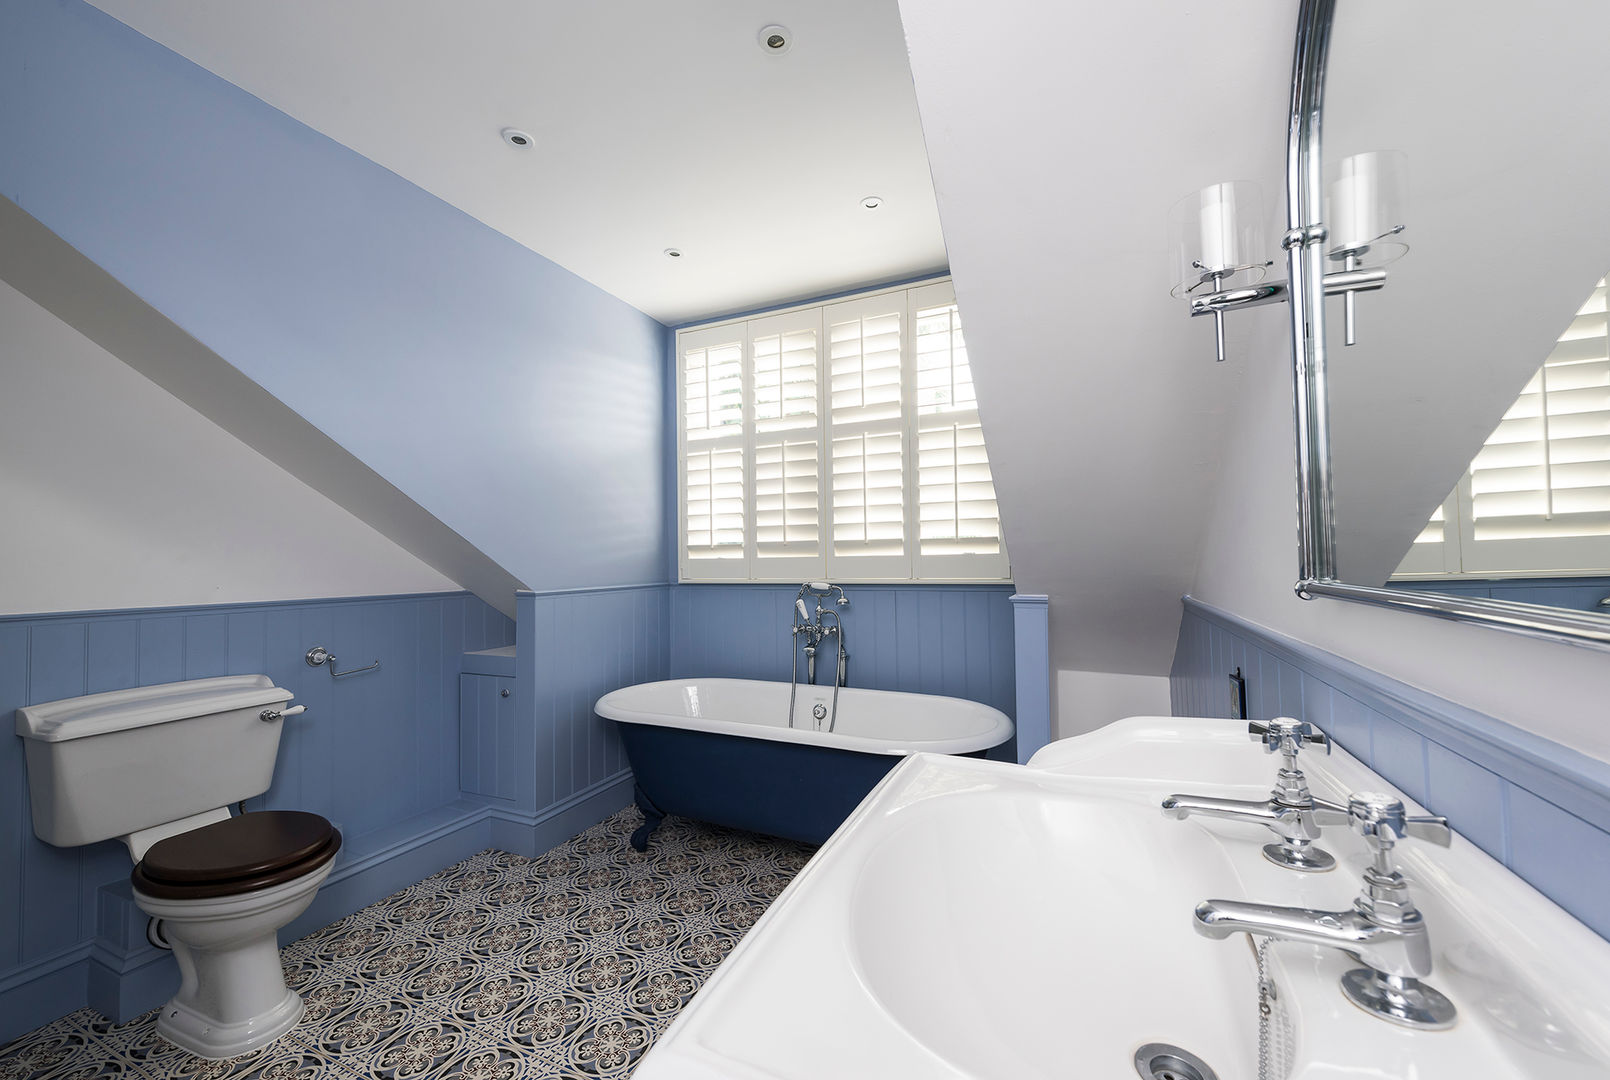 Full renovation on Trinity Road, London, Grand Design London Ltd Grand Design London Ltd Modern bathroom